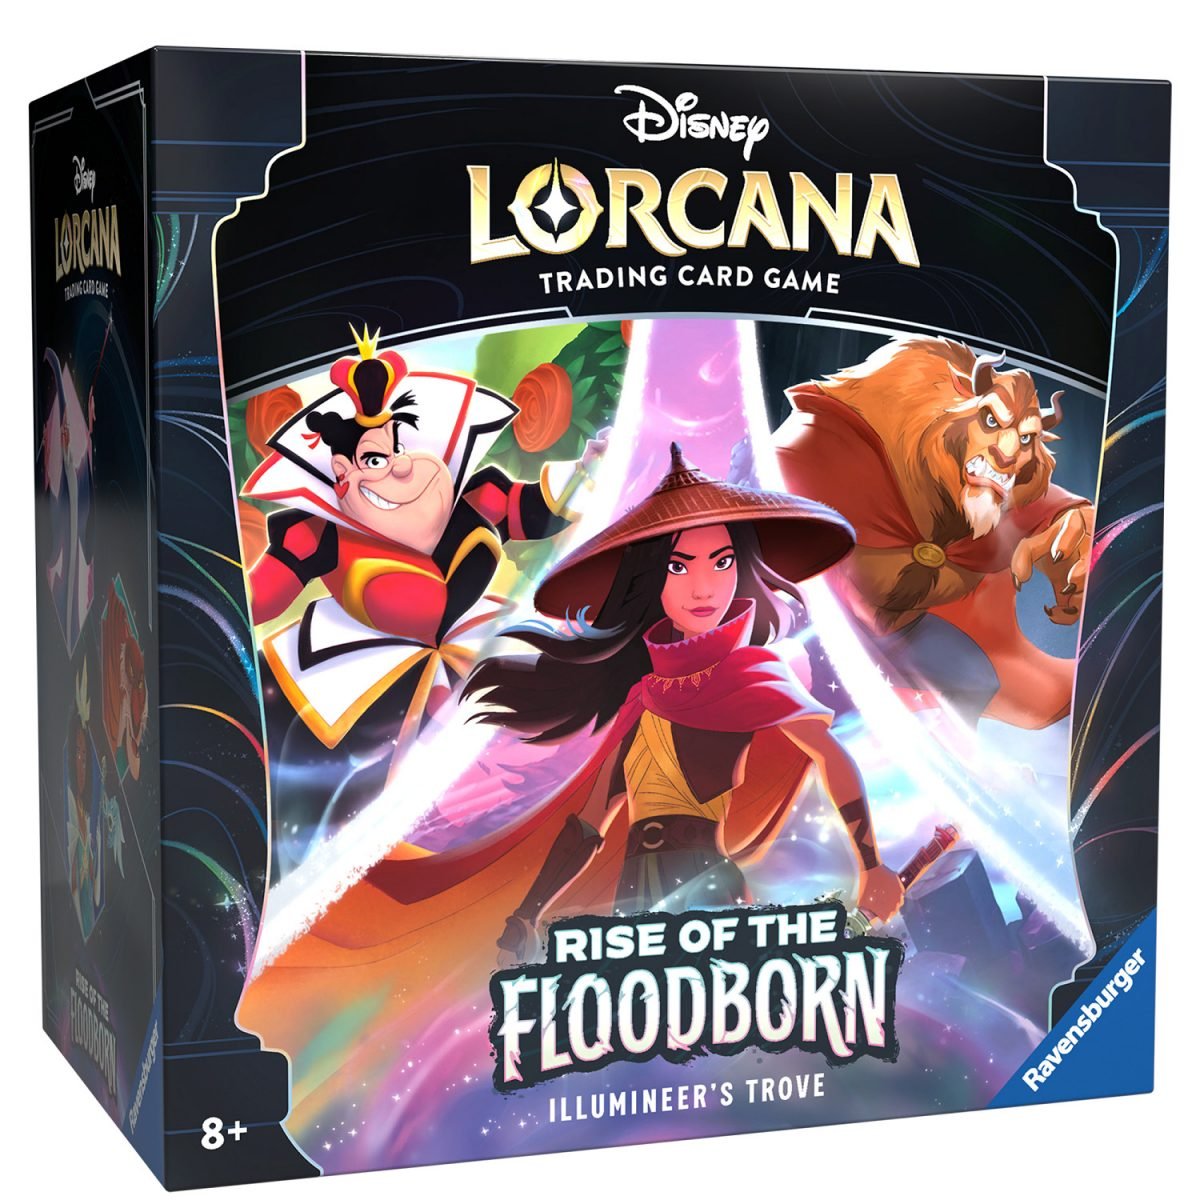 Rise Of The Floodborn Illumineers Trove - Disney Lorcana